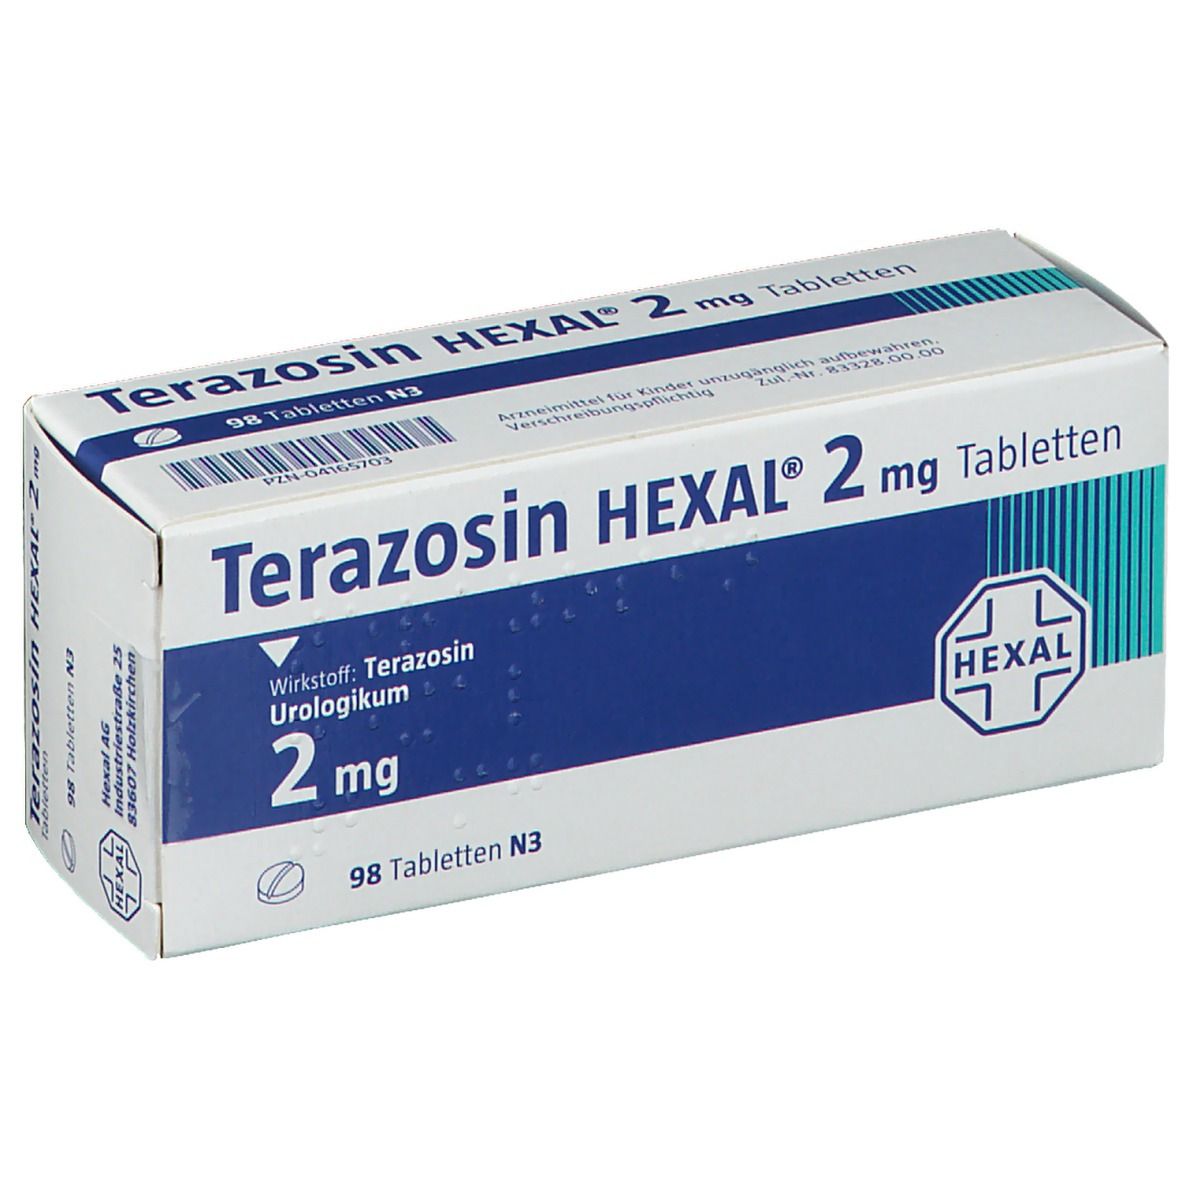 Terazosin HEXAL® 2 mg